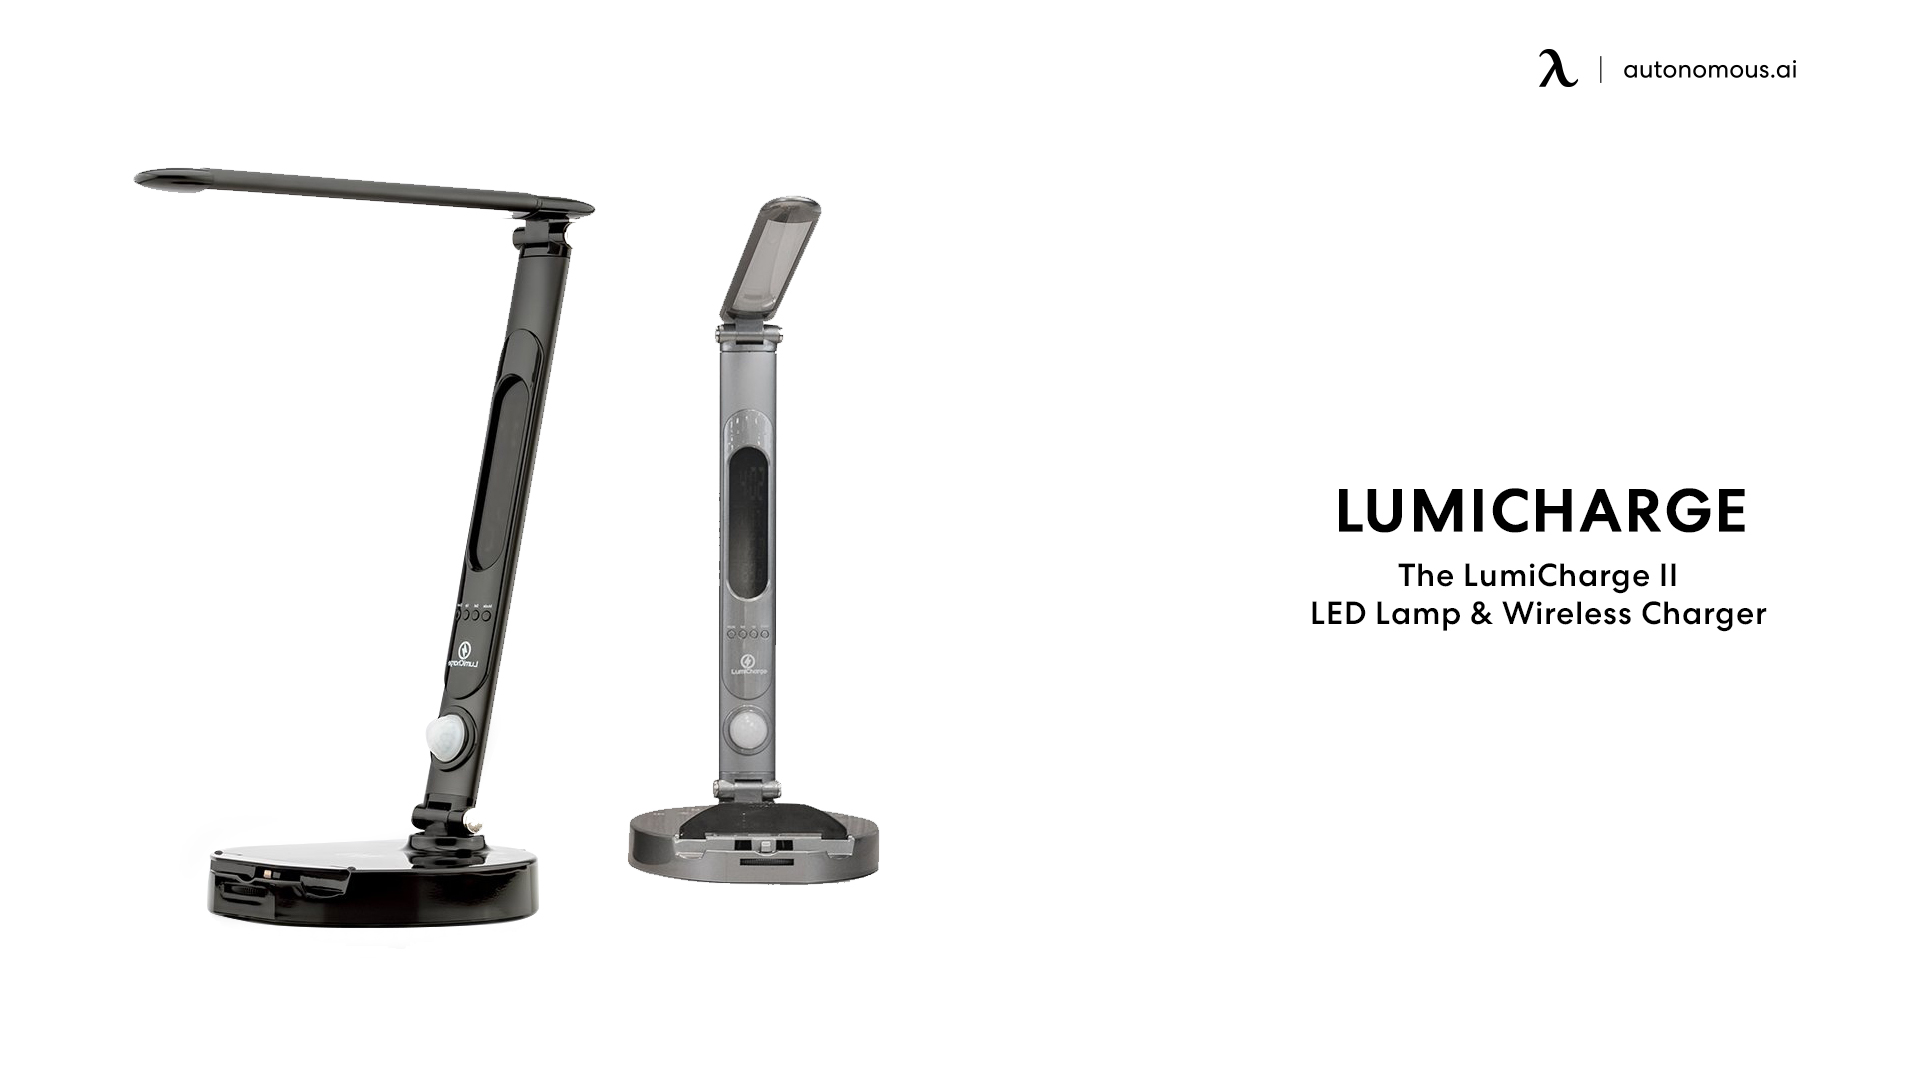 Lumicharge's minimal desk lamp